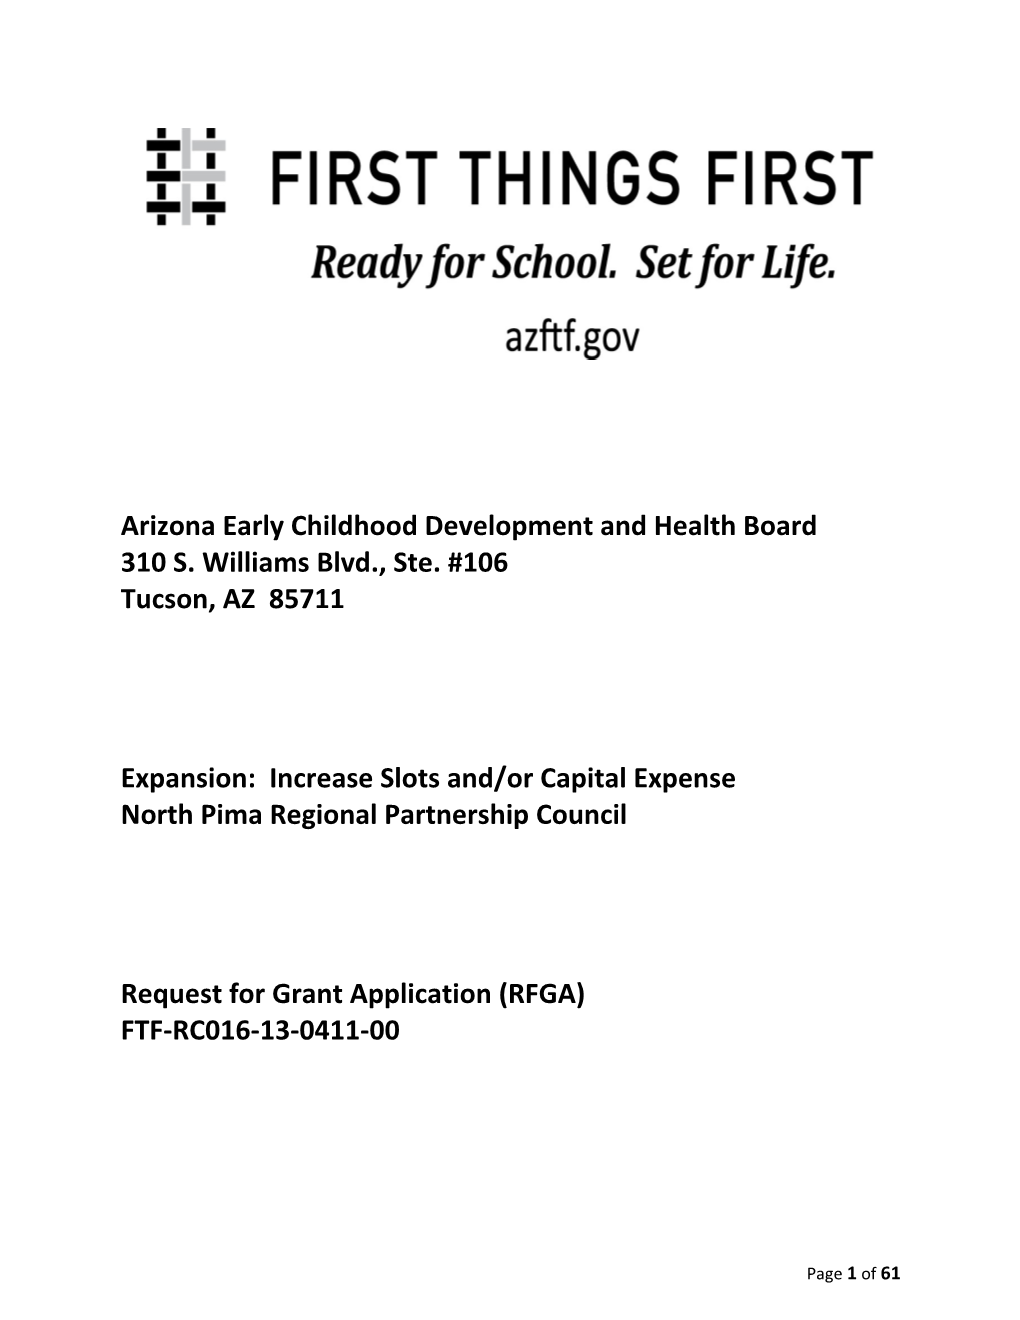 Arizona Early Childhood Development and Health Board s3